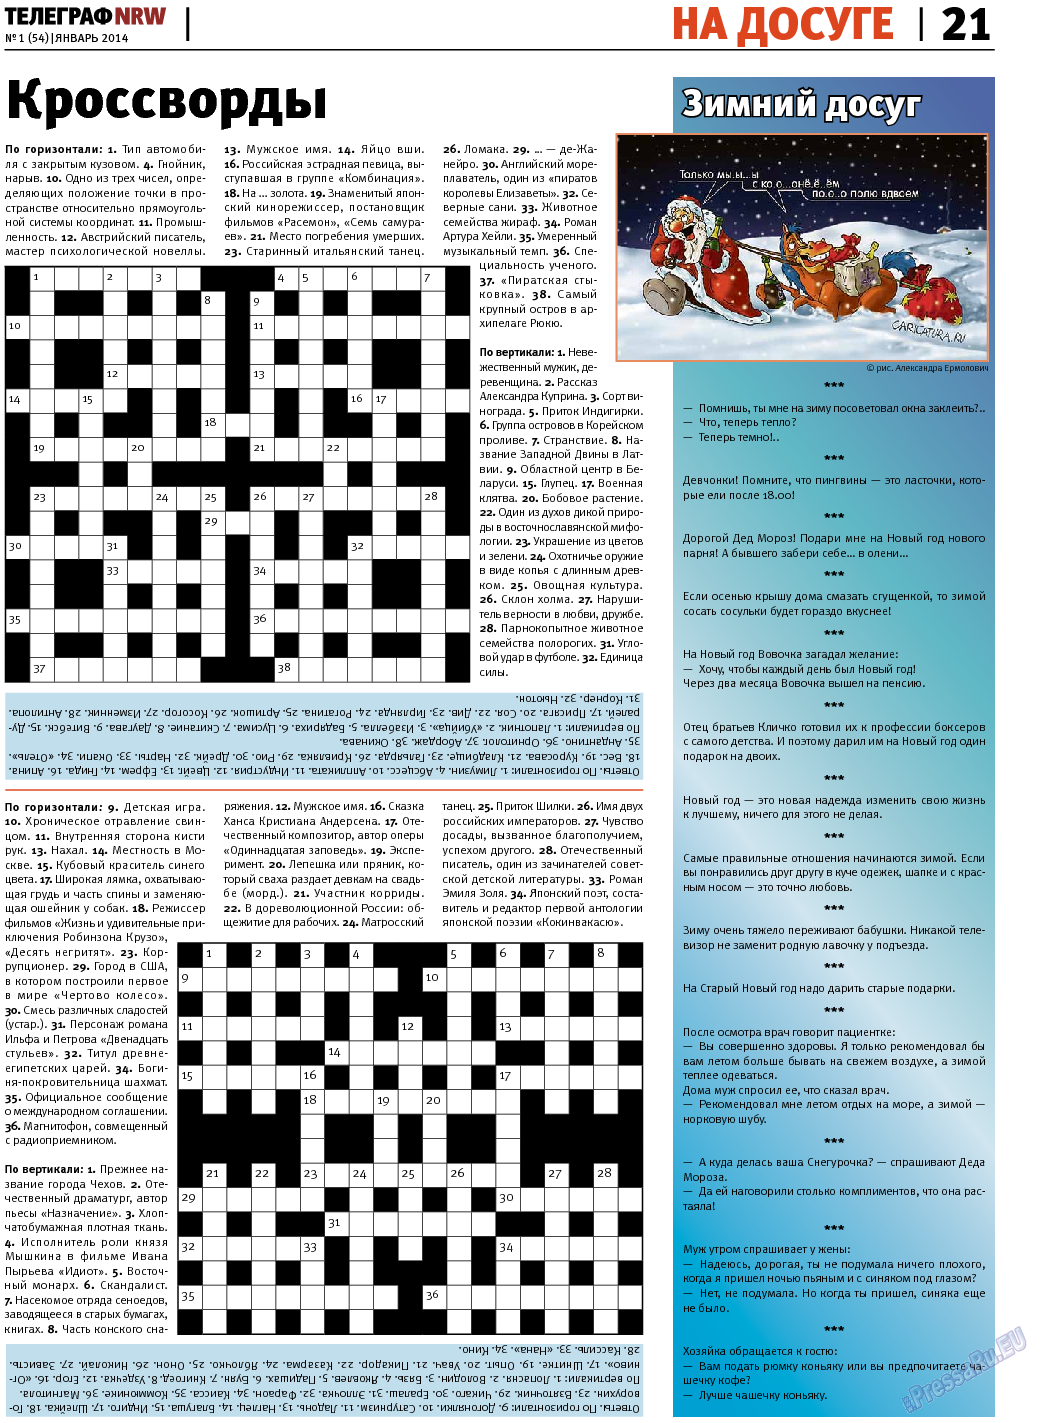 Телеграф NRW, газета. 2014 №1 стр.21